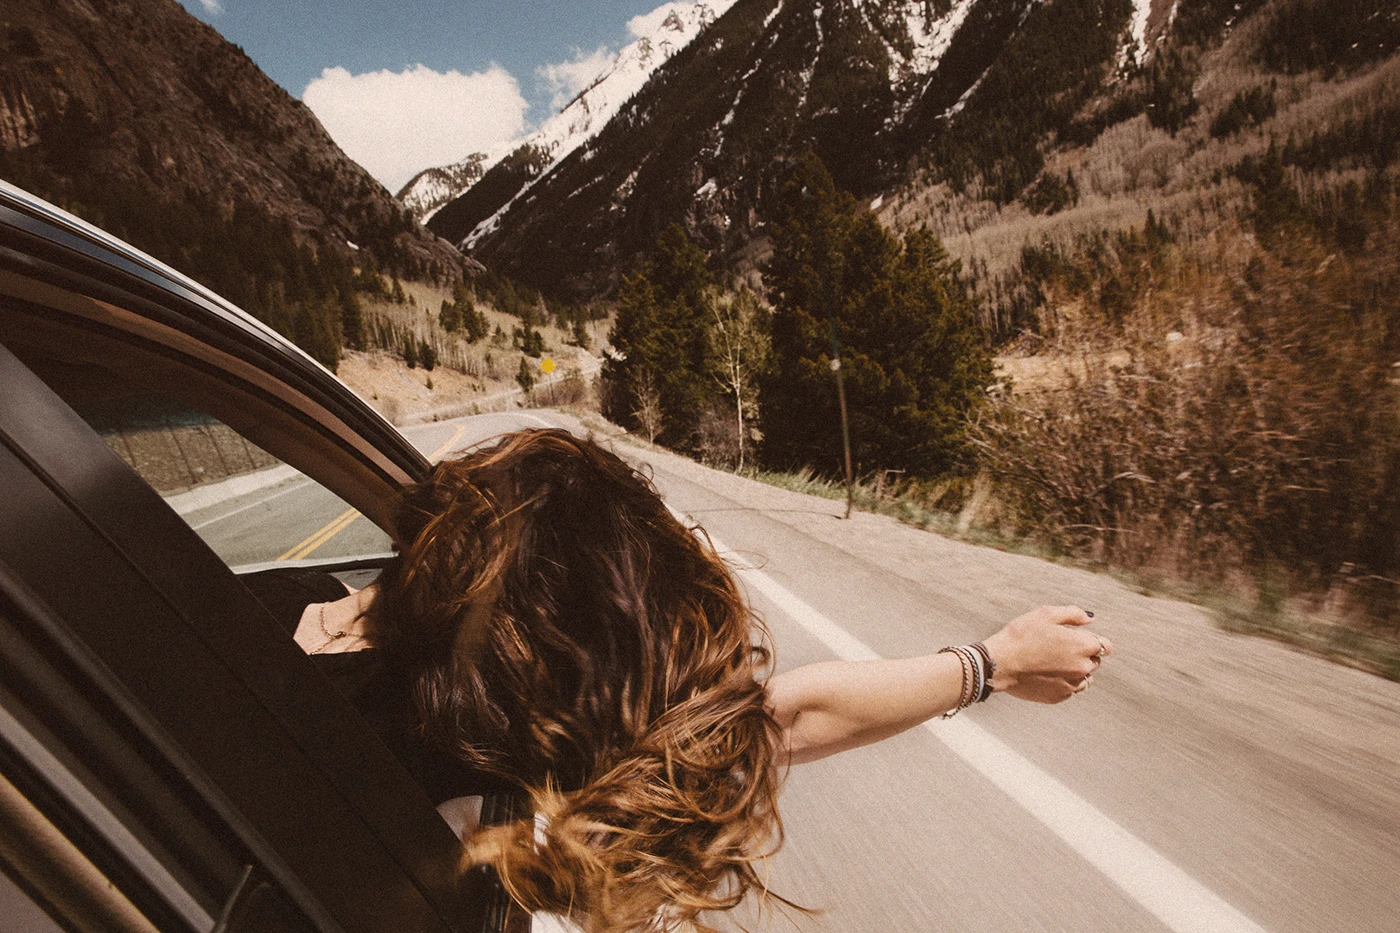 Road trip in summer, woman hanging outside car window